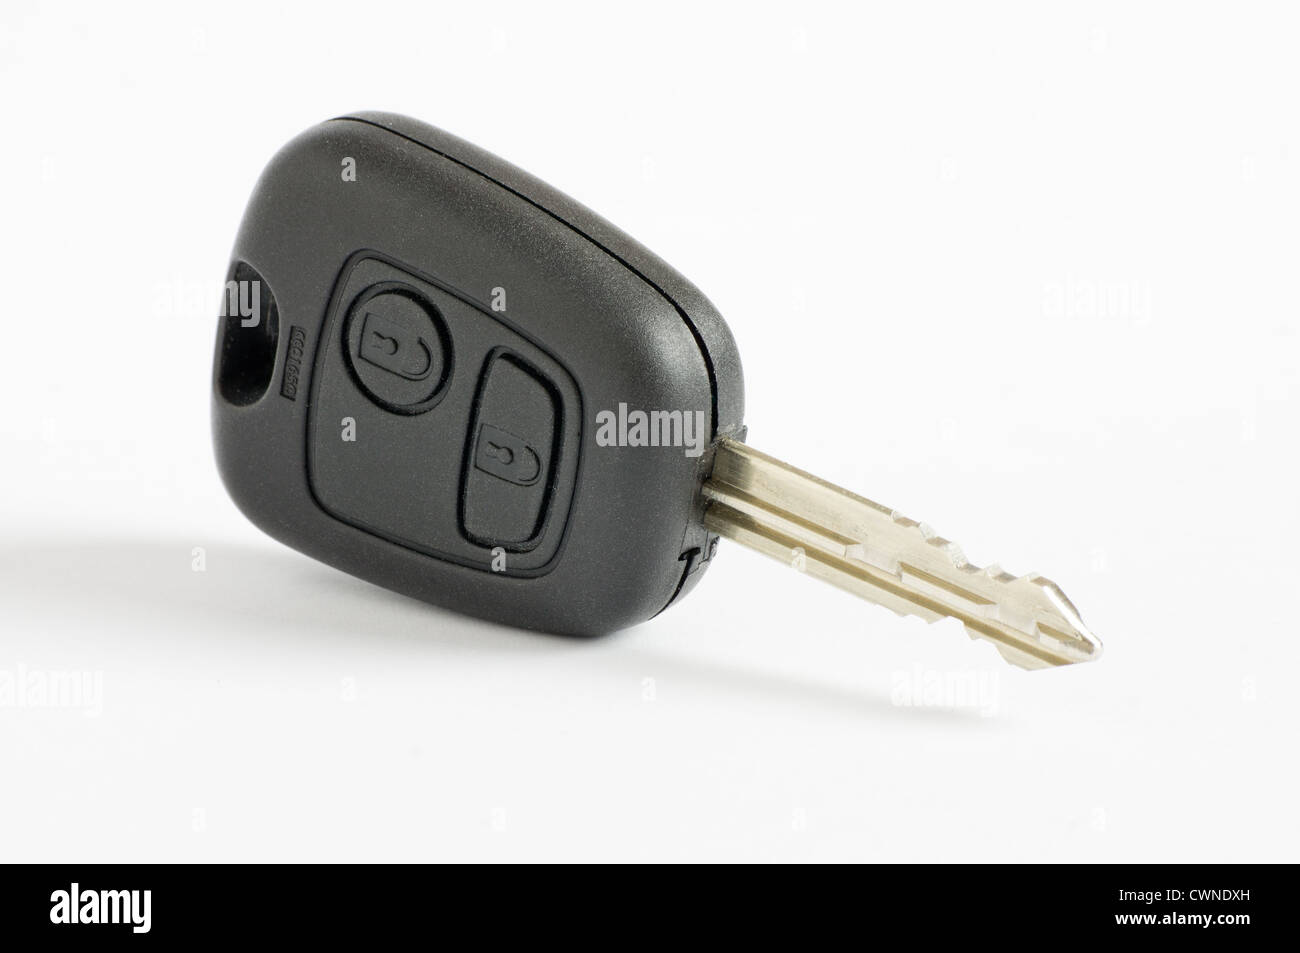 Citroen car key on a white back ground Stock Photo